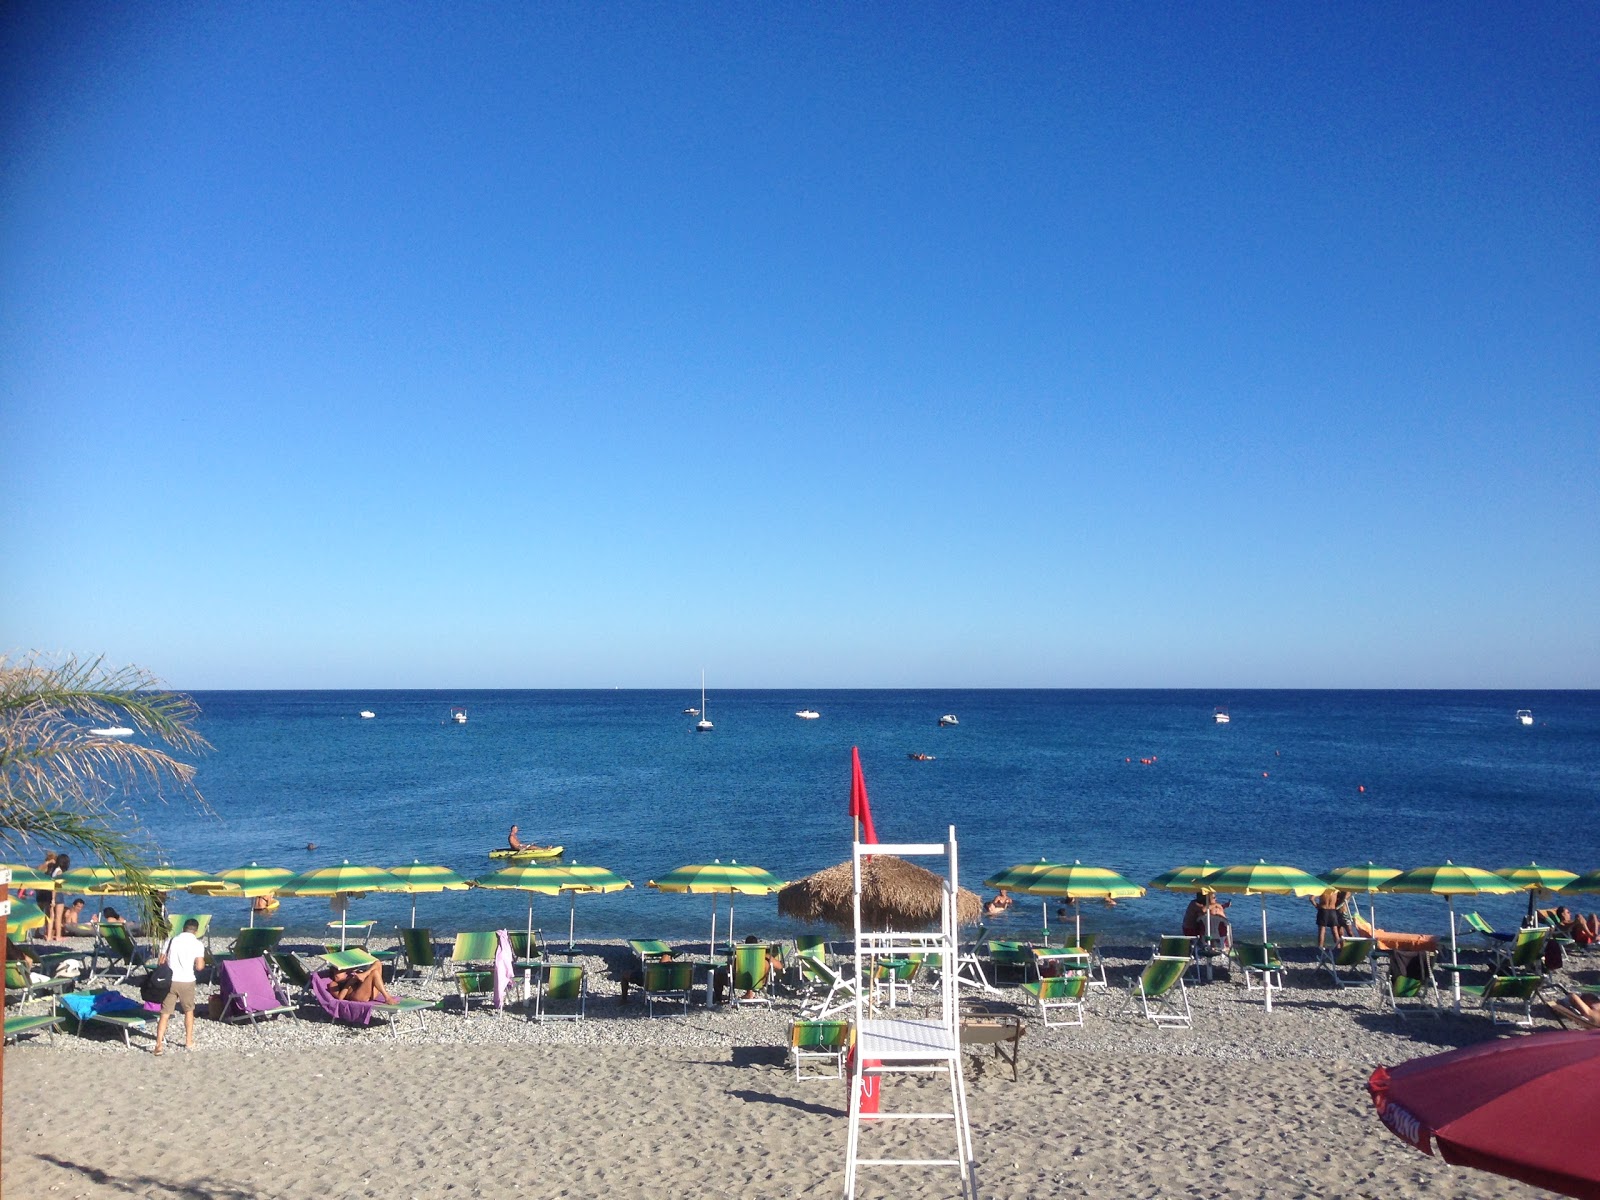 Foto de Bovalino Marina beach - lugar popular entre os apreciadores de relaxamento